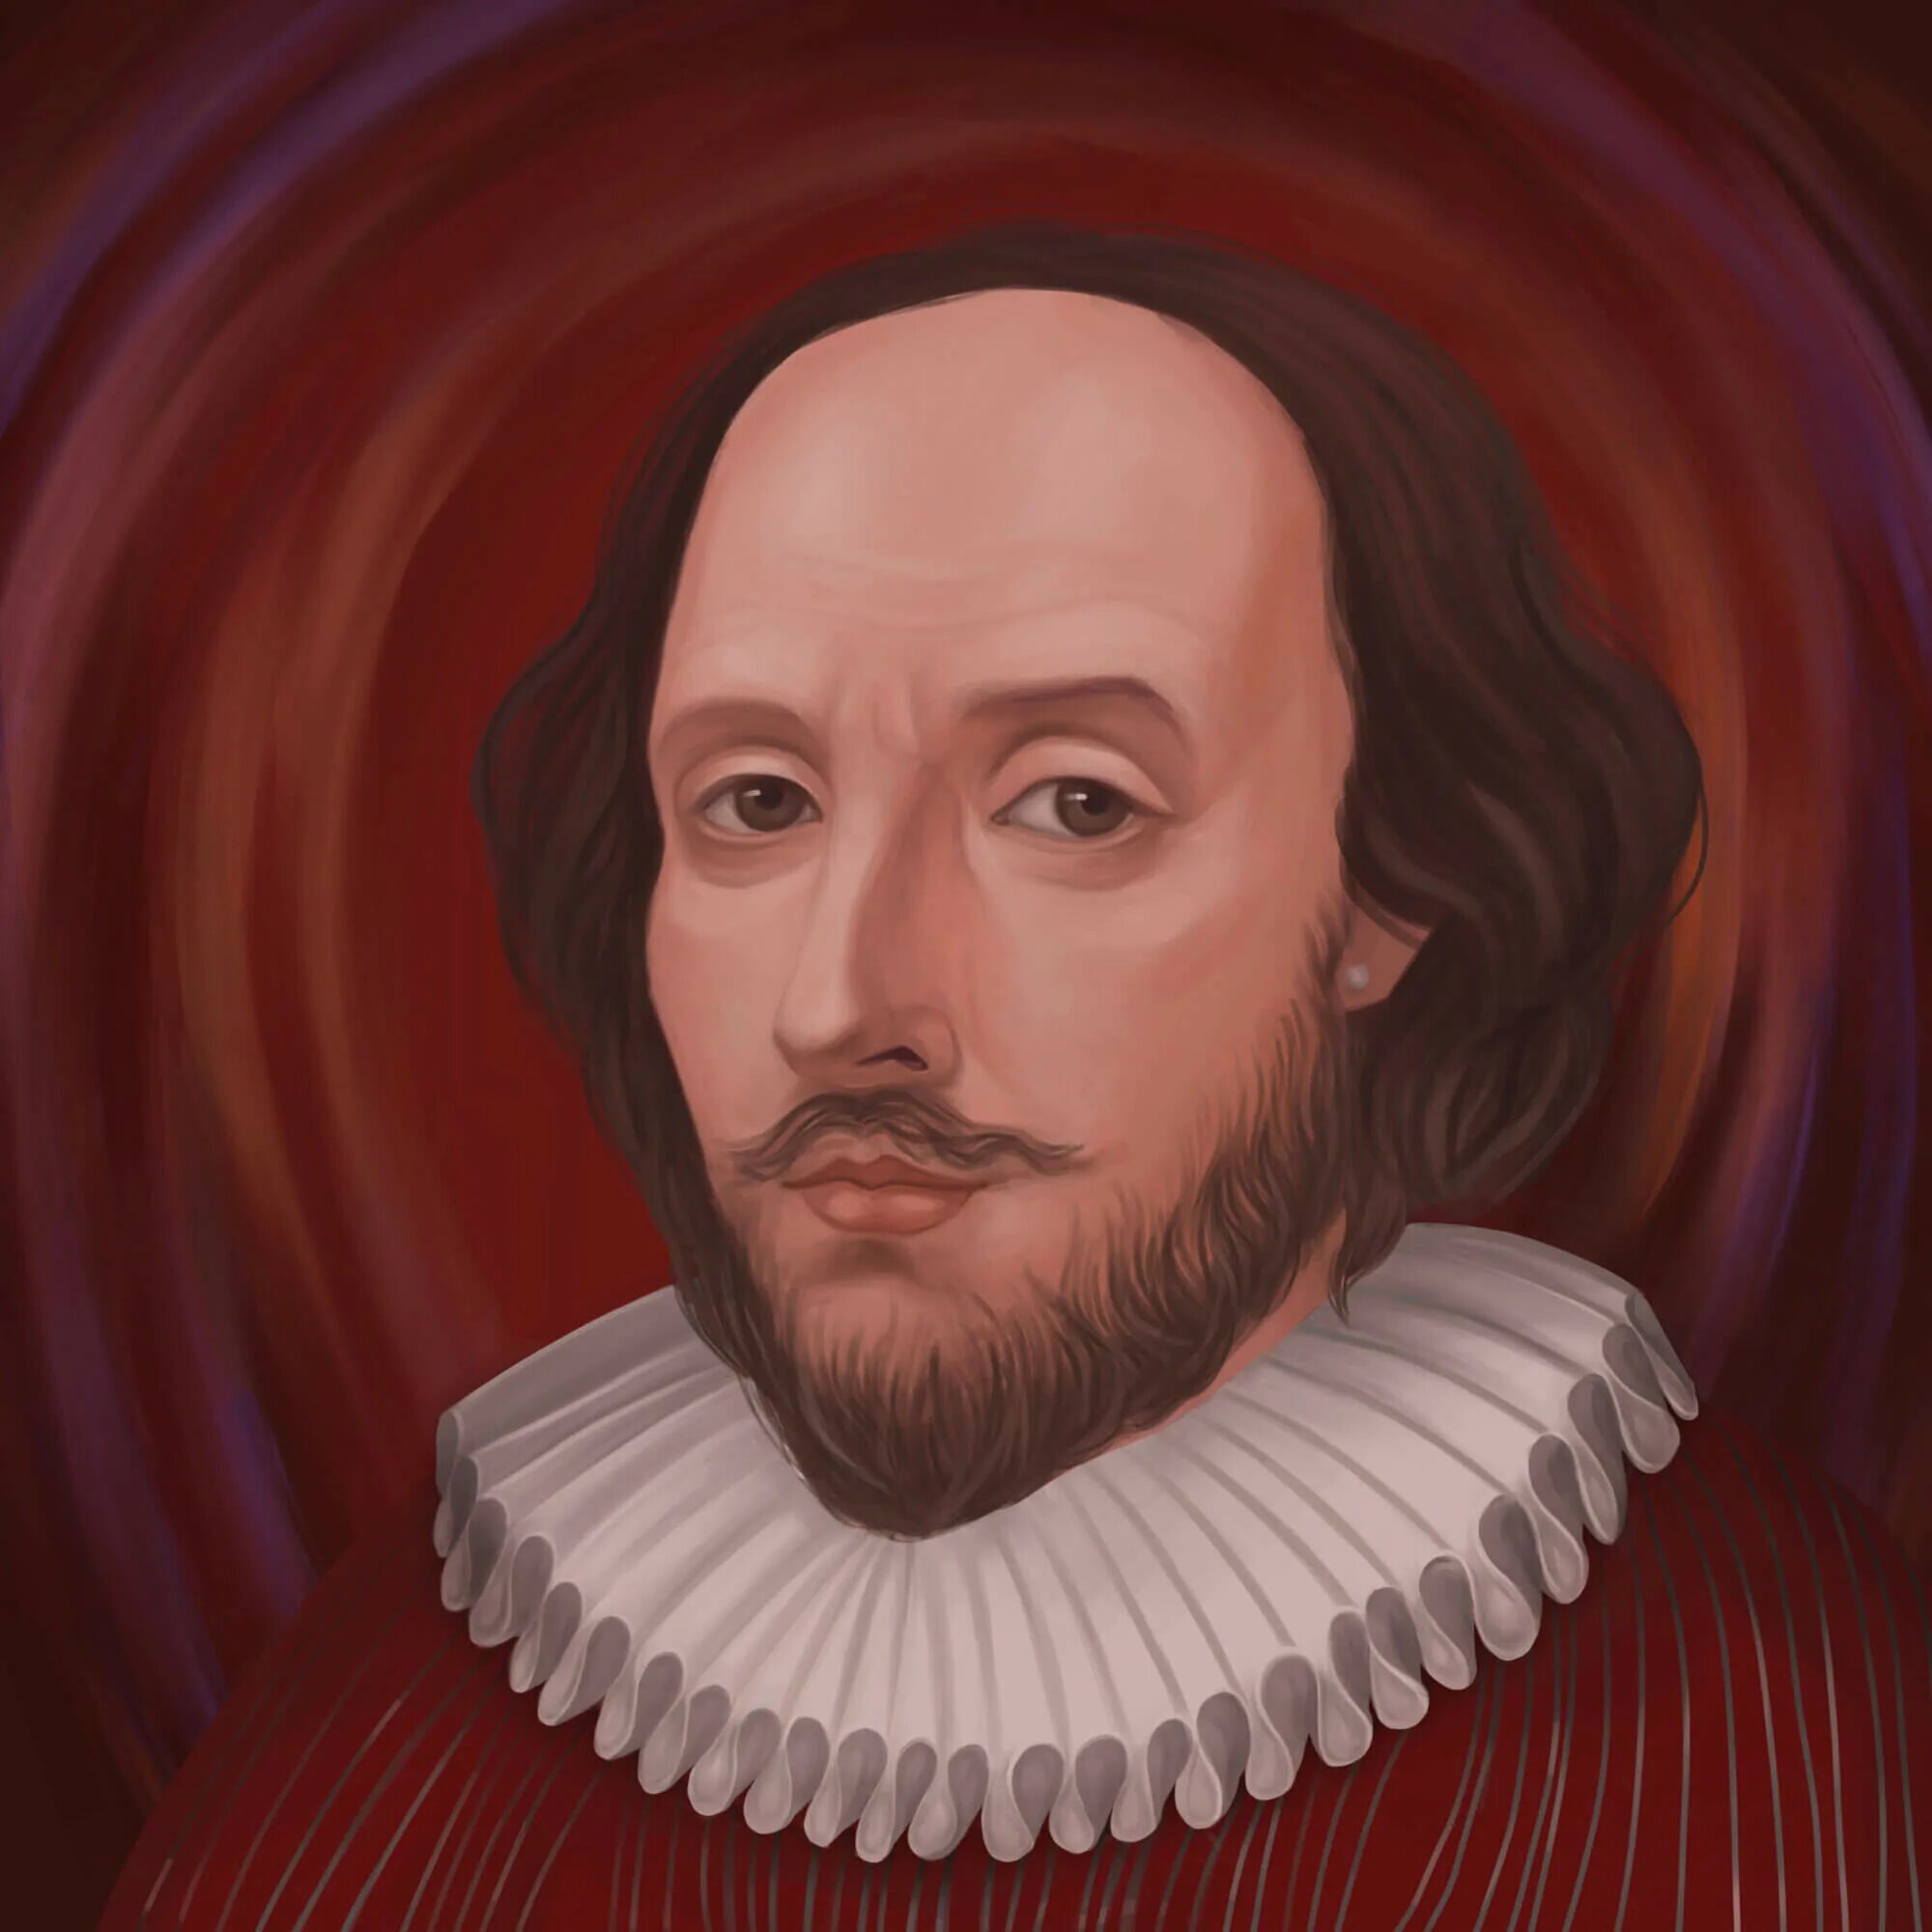 Шекспир Уильям. Вильям Шекспир портрет. У льм Шекспир. Уильям Шекспир знаменитый портрет. William shakespeare s